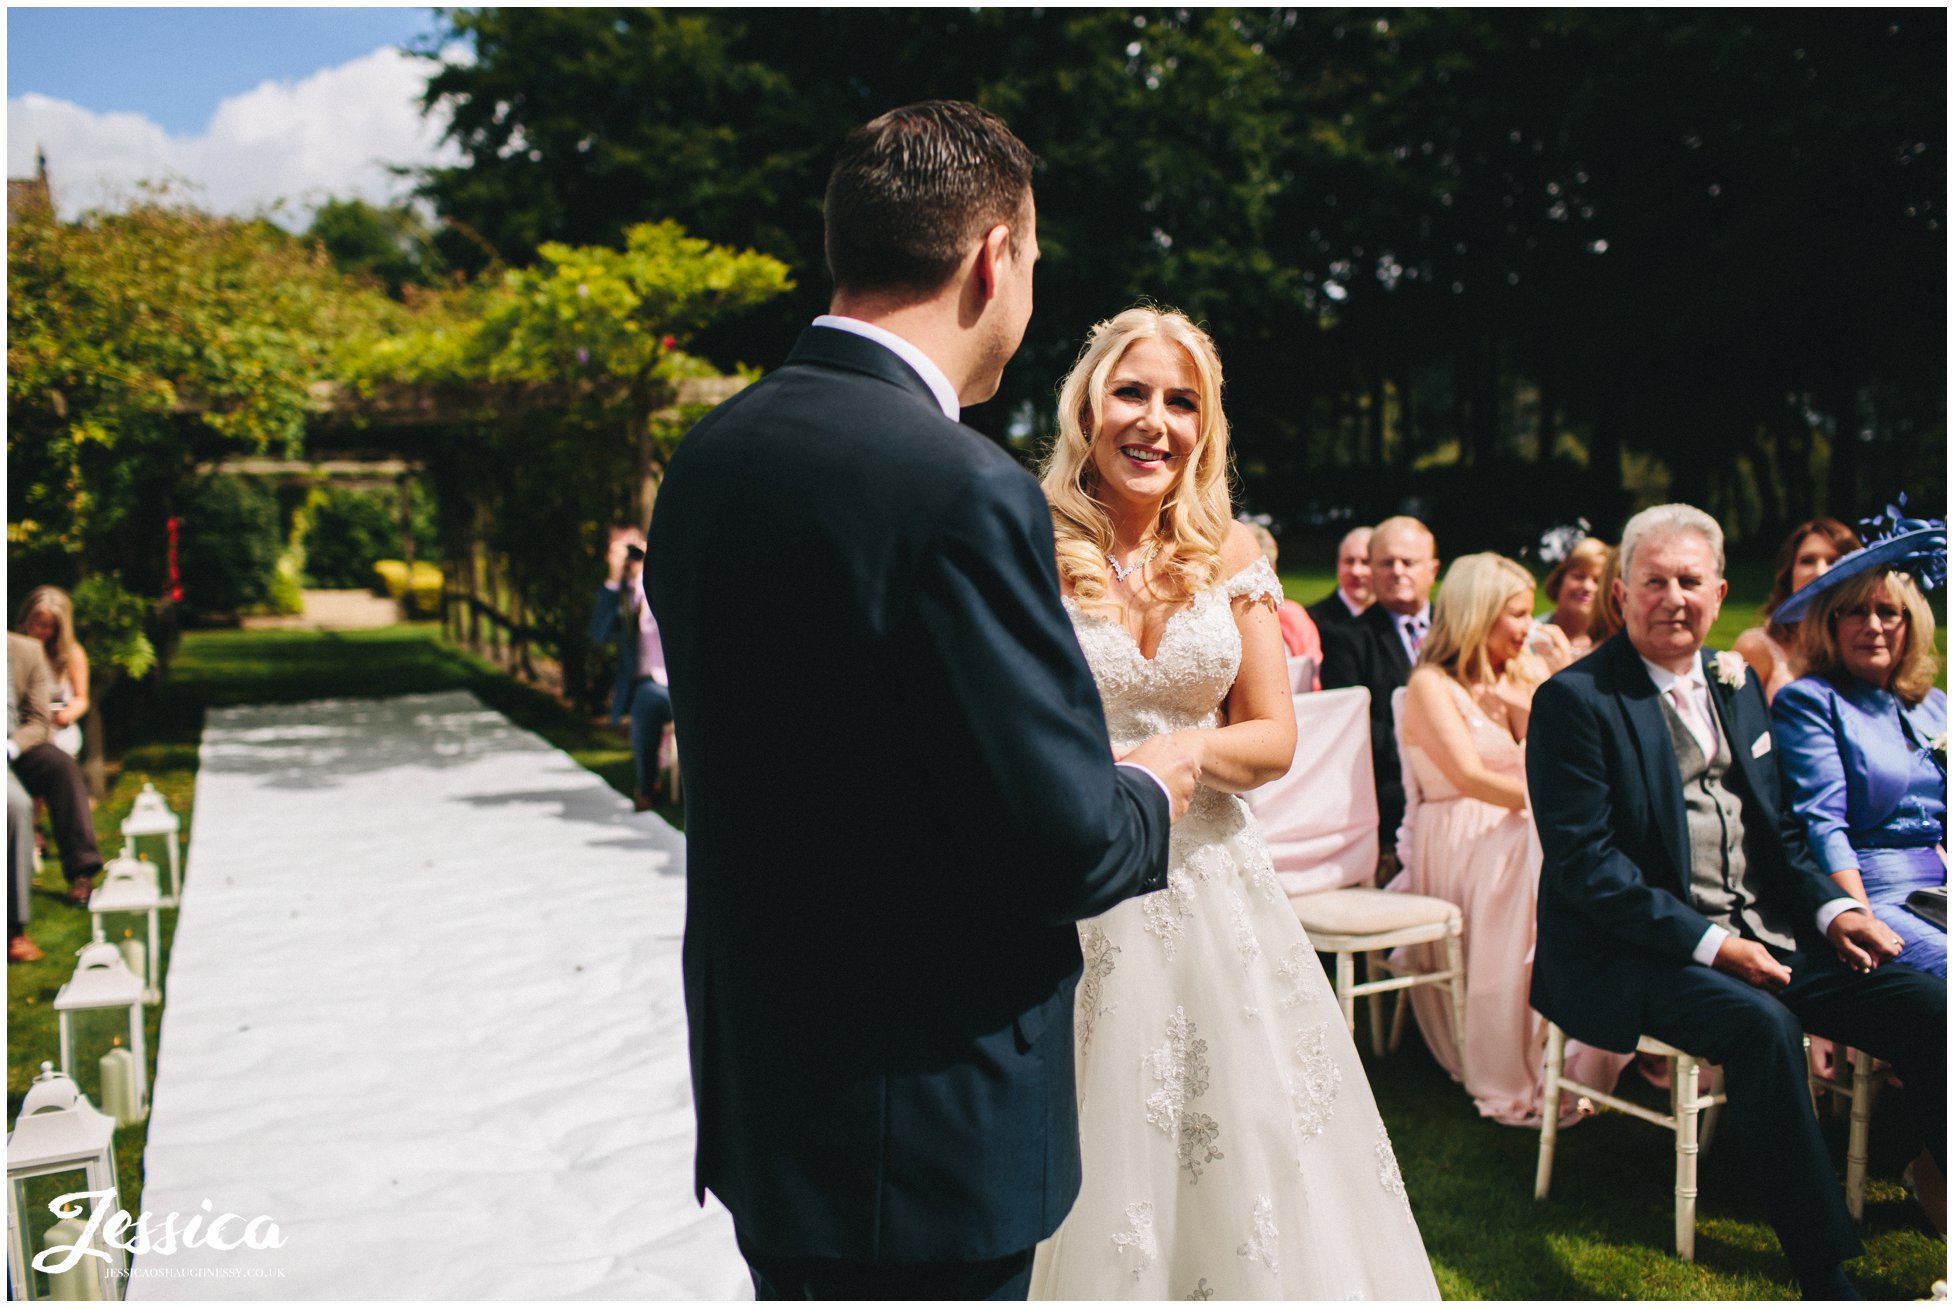 cheshire wedding photographer - bride & groom during wedding ceremony